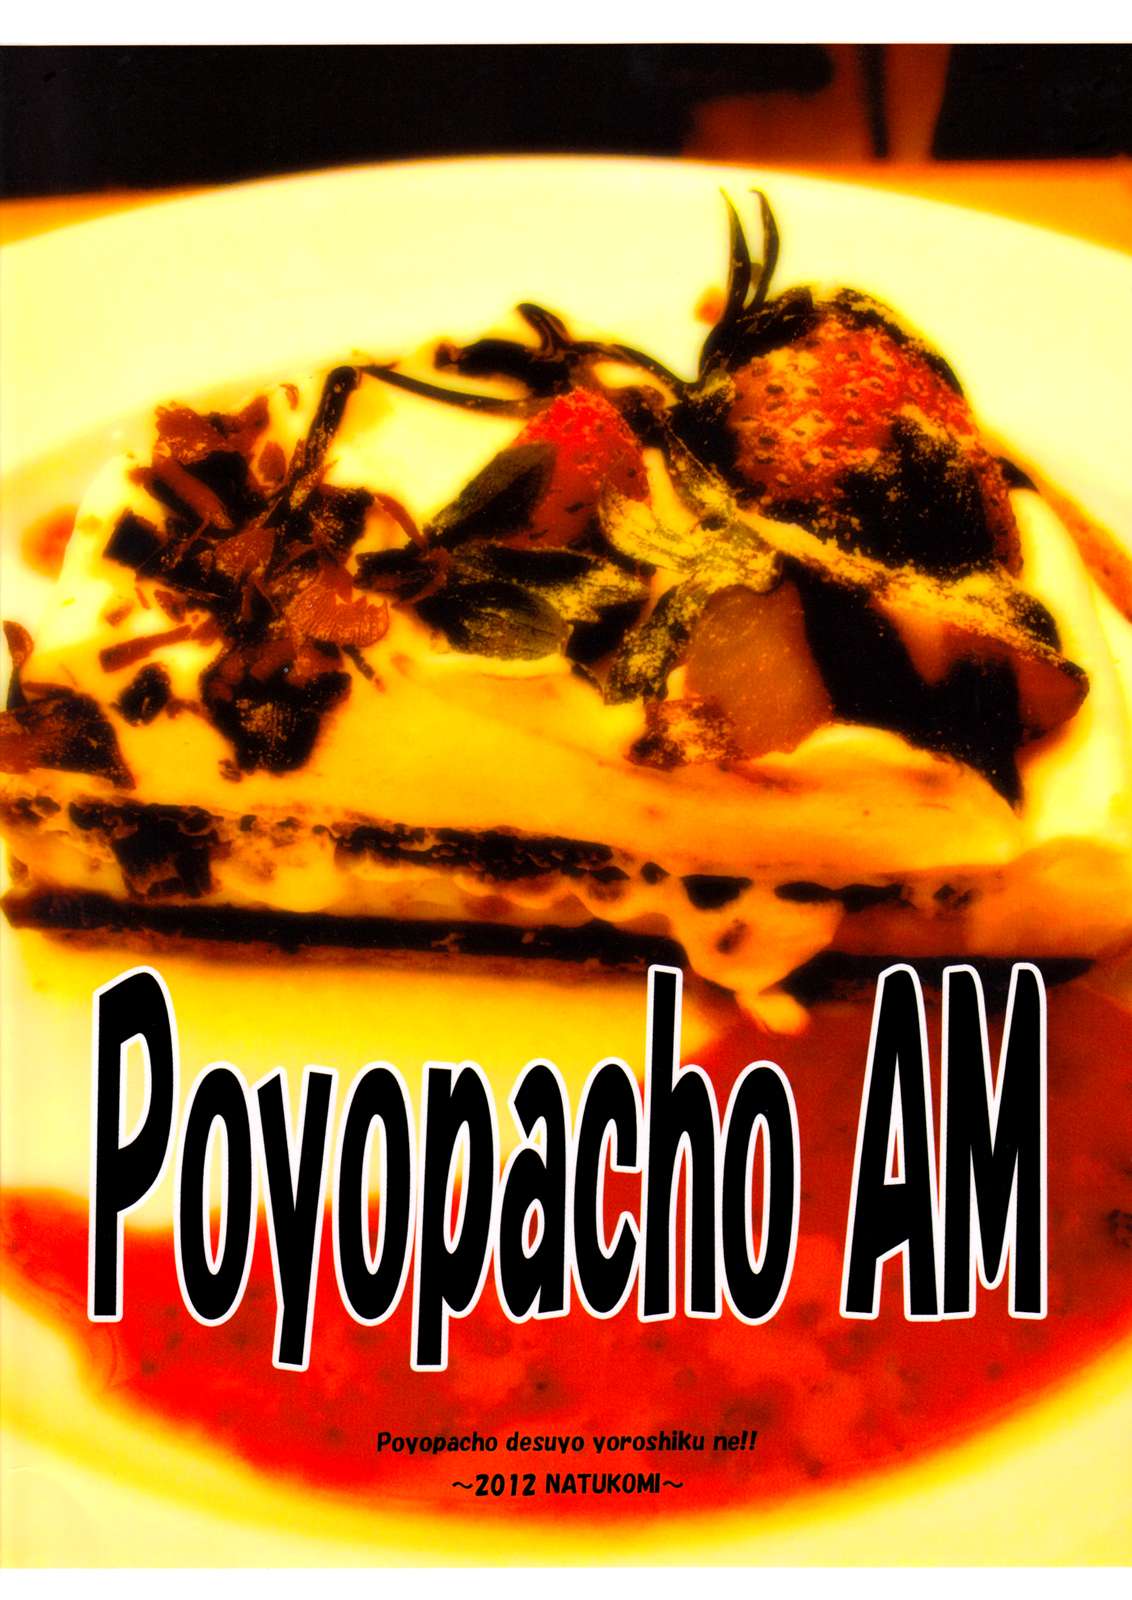 Poyopacho AM Chapter-1 - 20